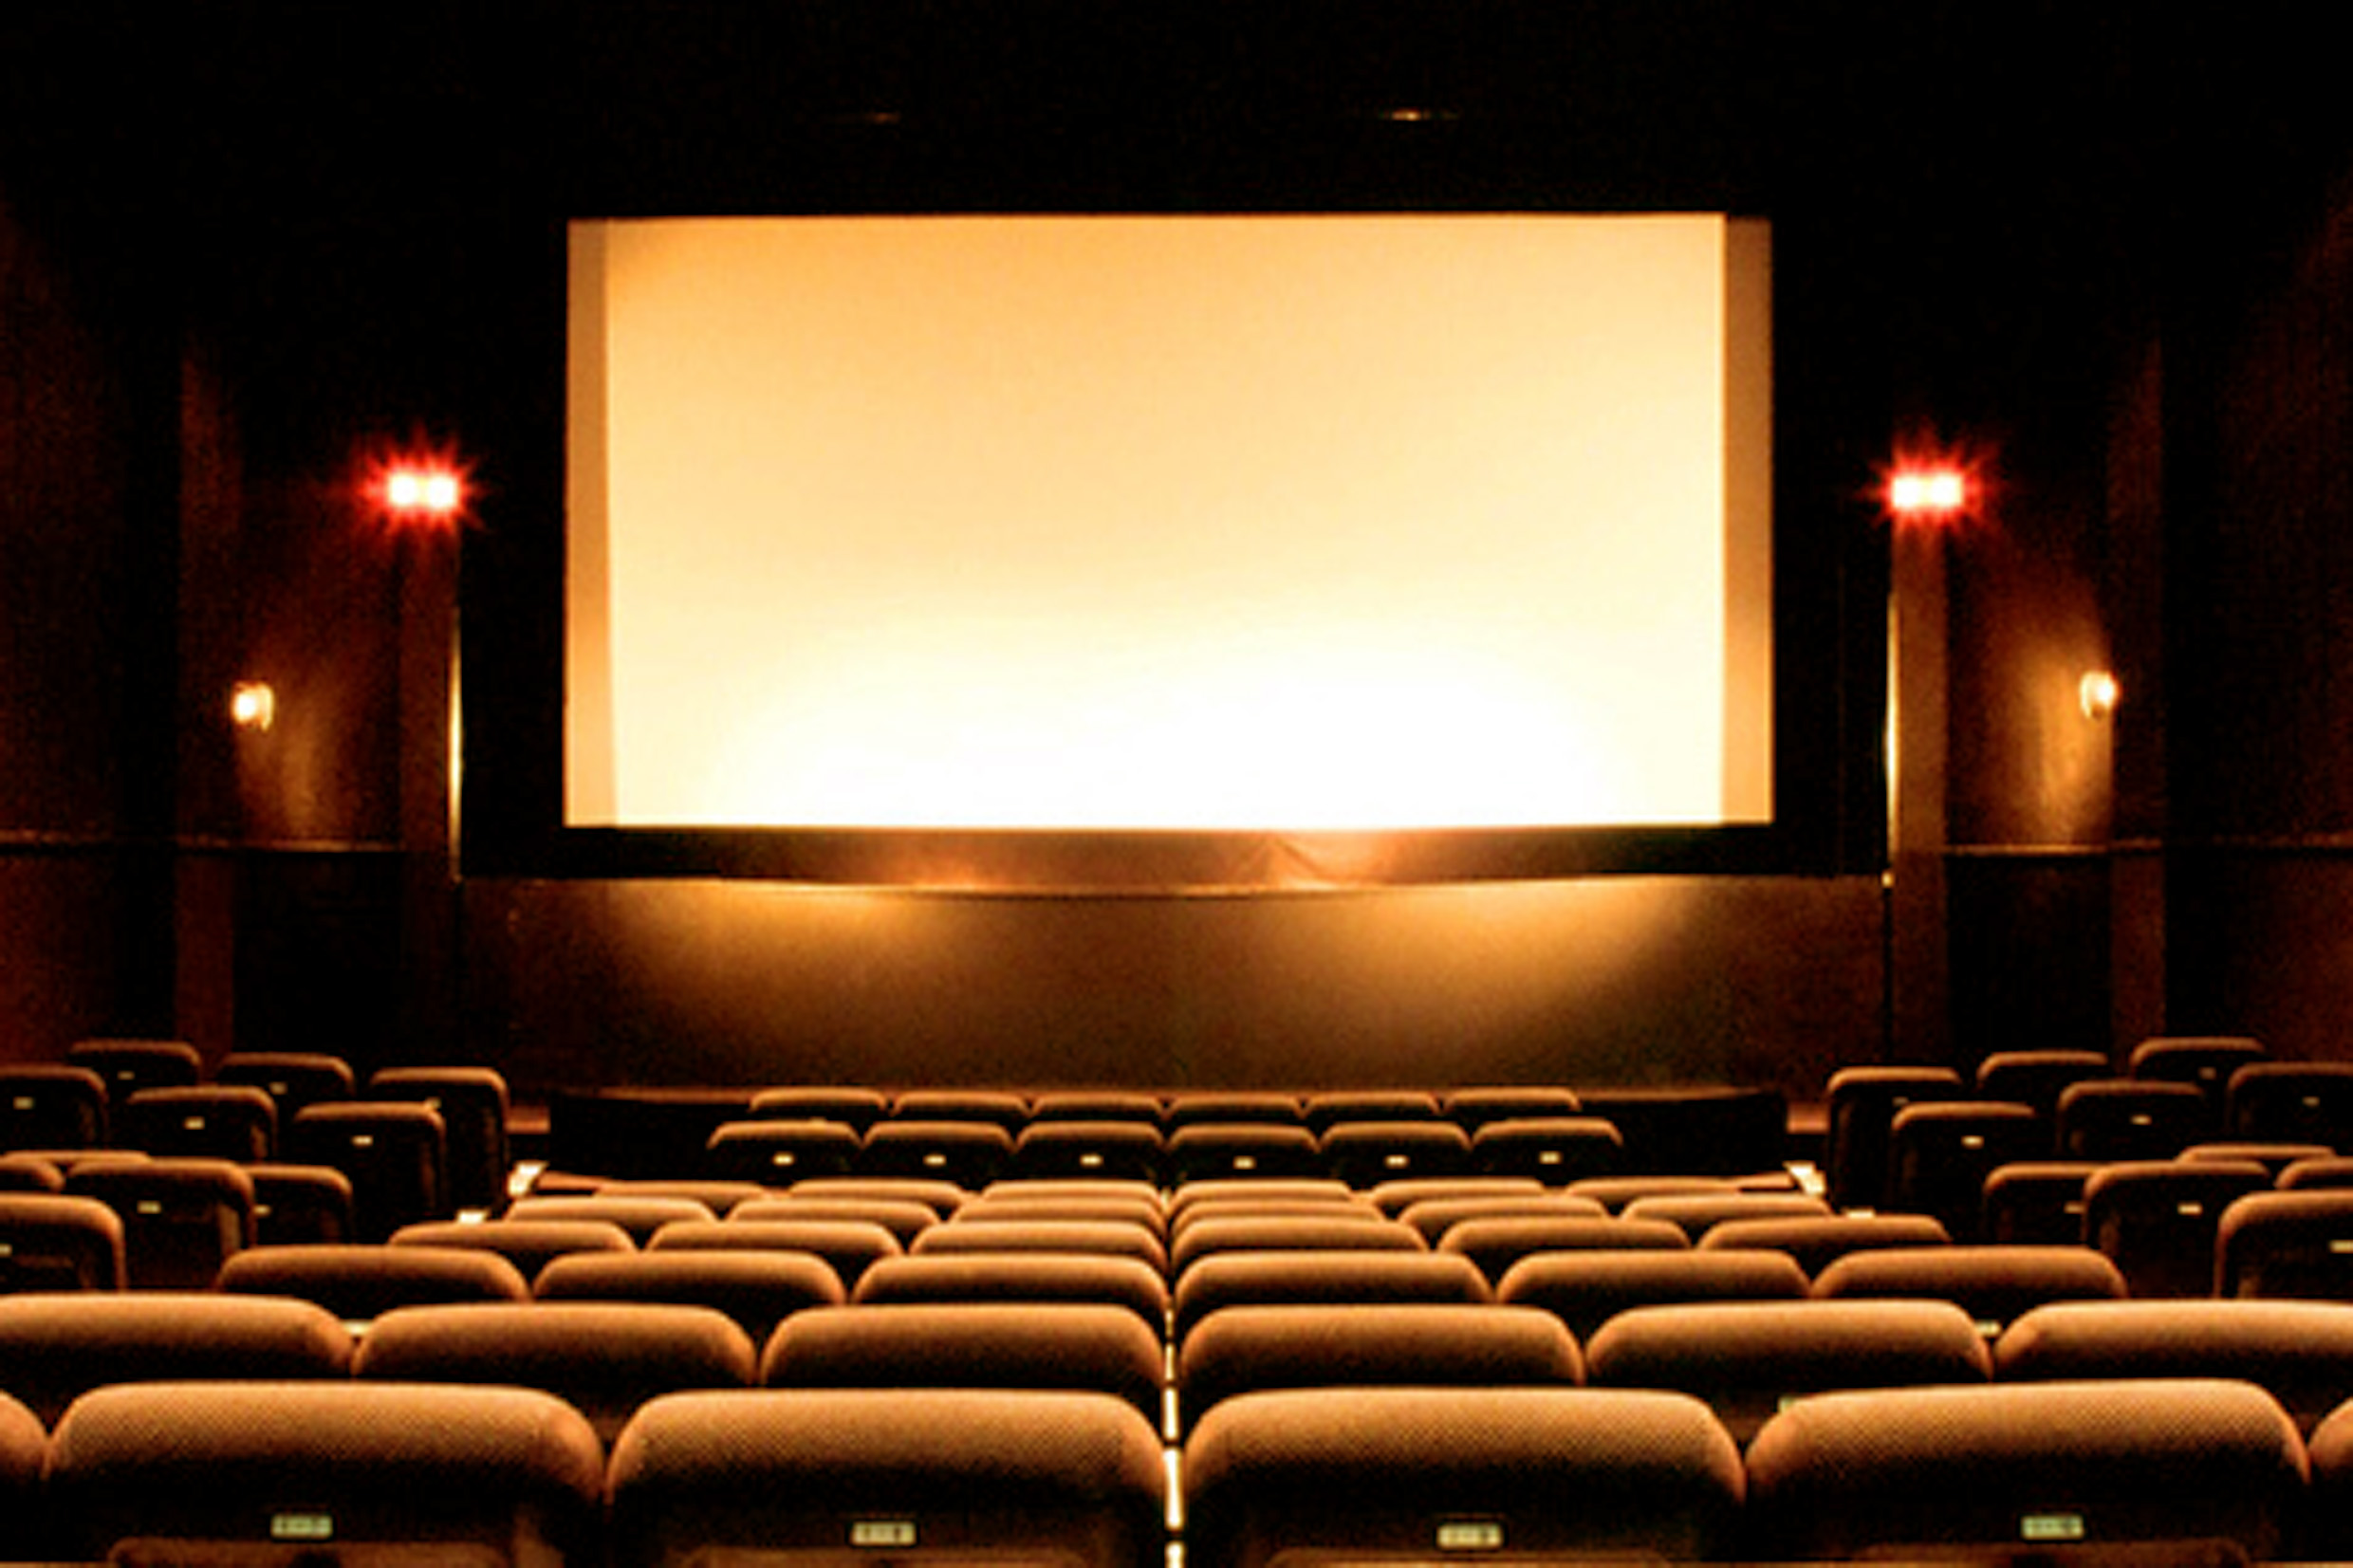 Sala de cinema <a style='float:right;color:#ccc' href='https://www3.al.sp.gov.br/repositorio/noticia/N-03-2016/fg186850.jpg' target=_blank><i class='bi bi-zoom-in'></i> Clique para ver a imagem </a>